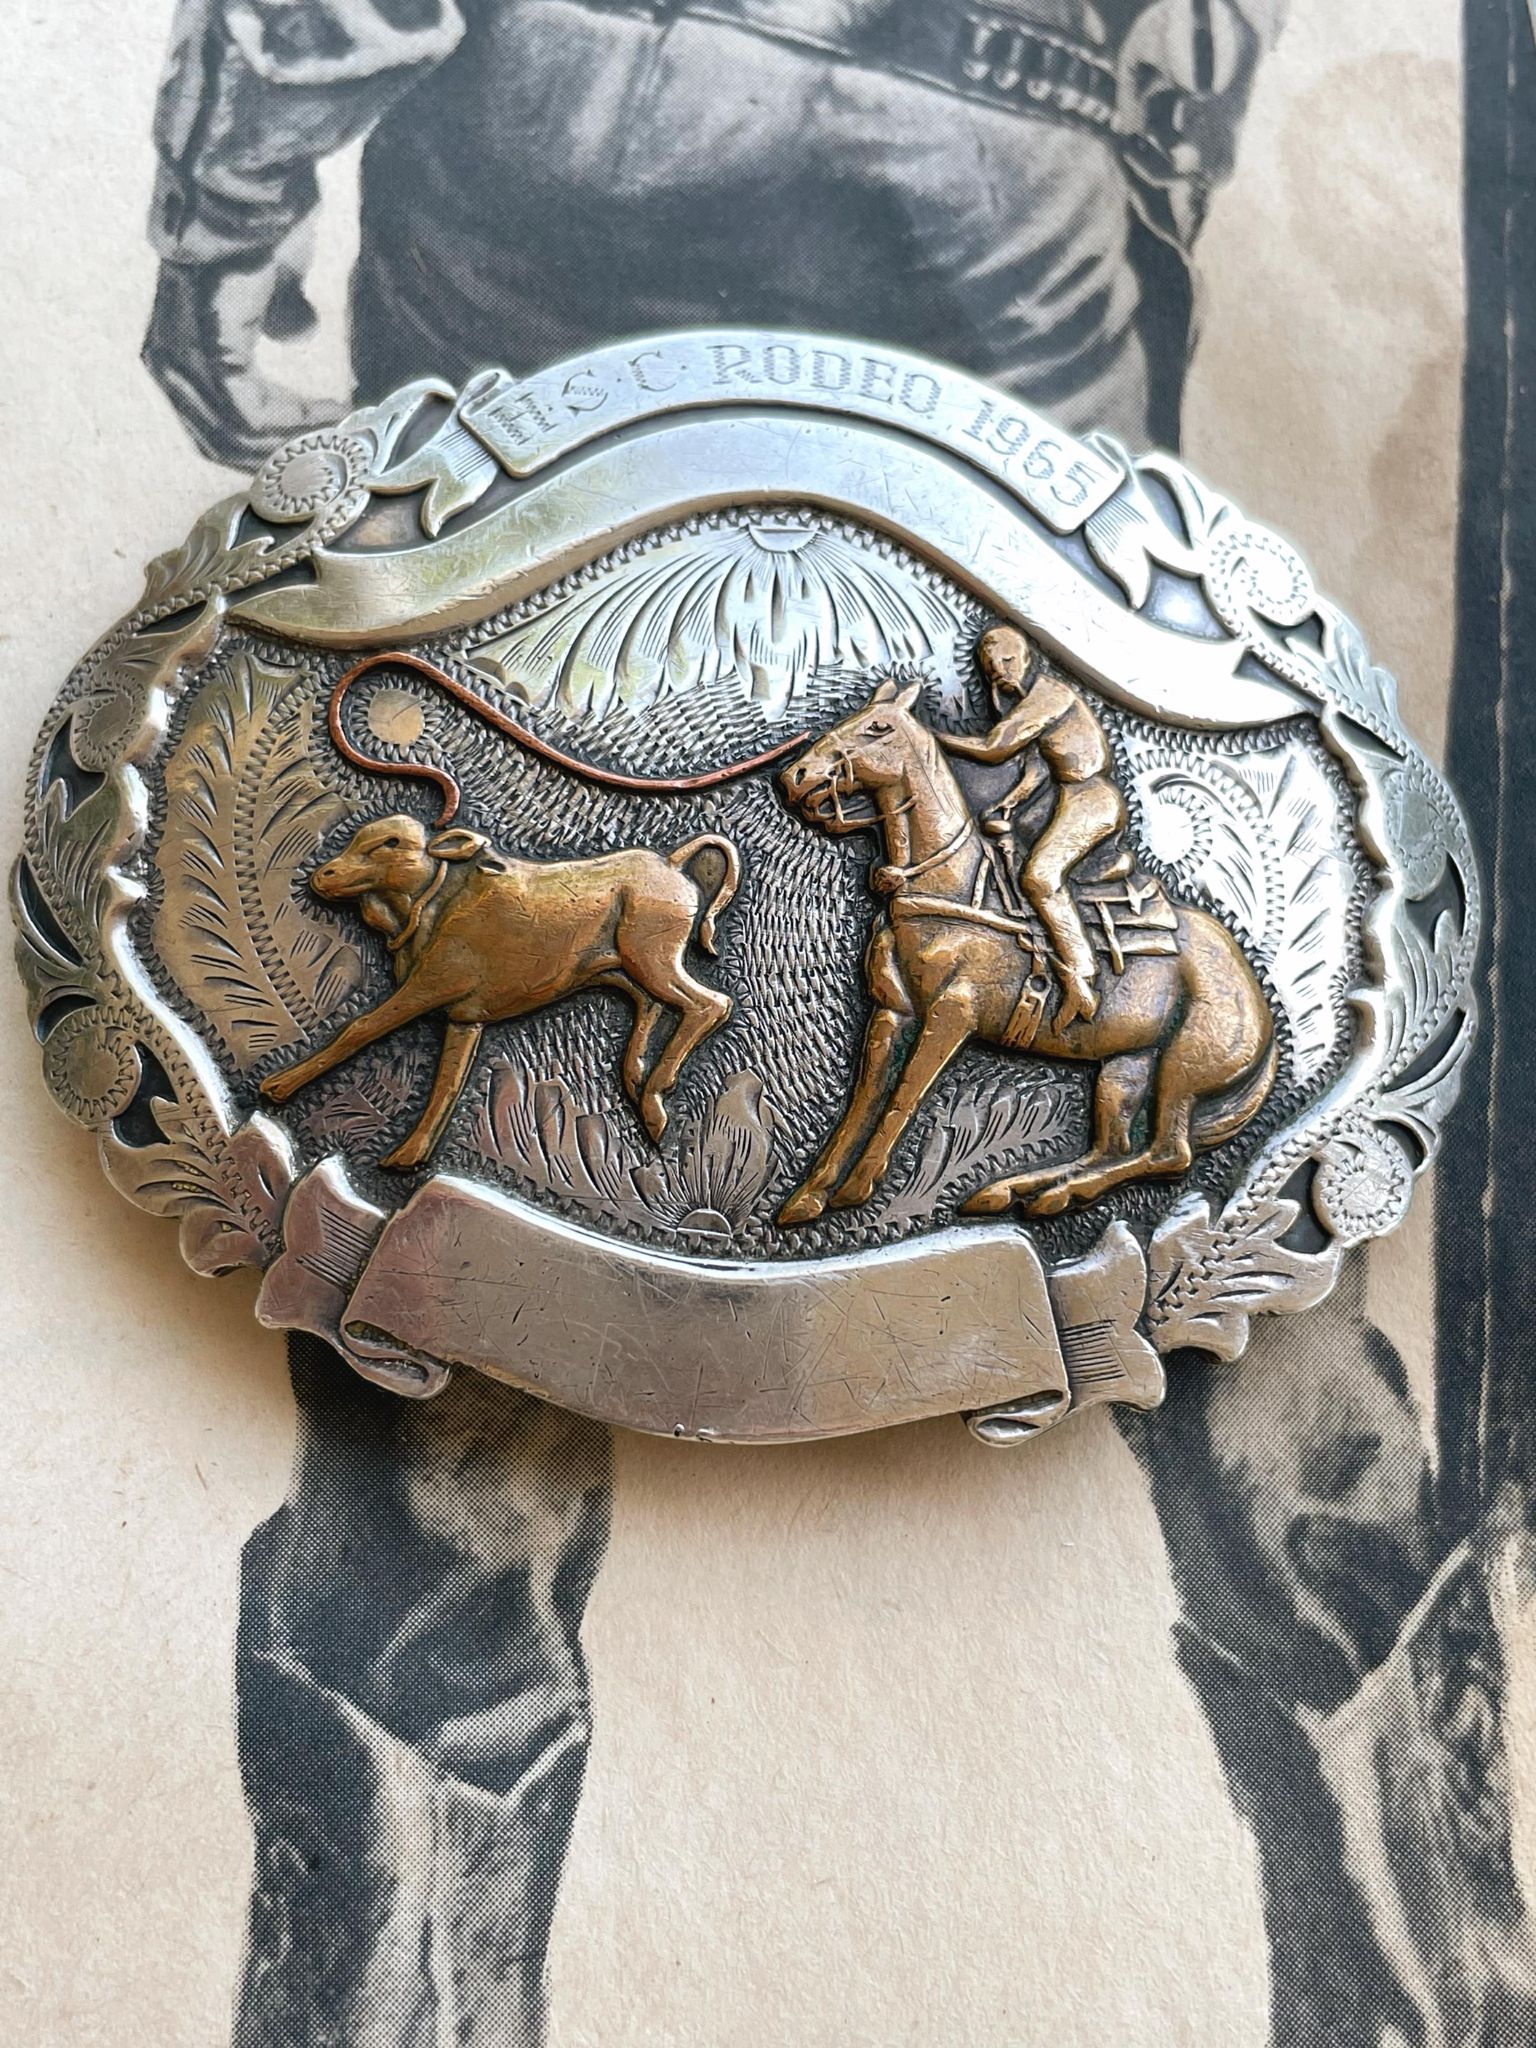 Vintage Rodeo Trophy Buckle